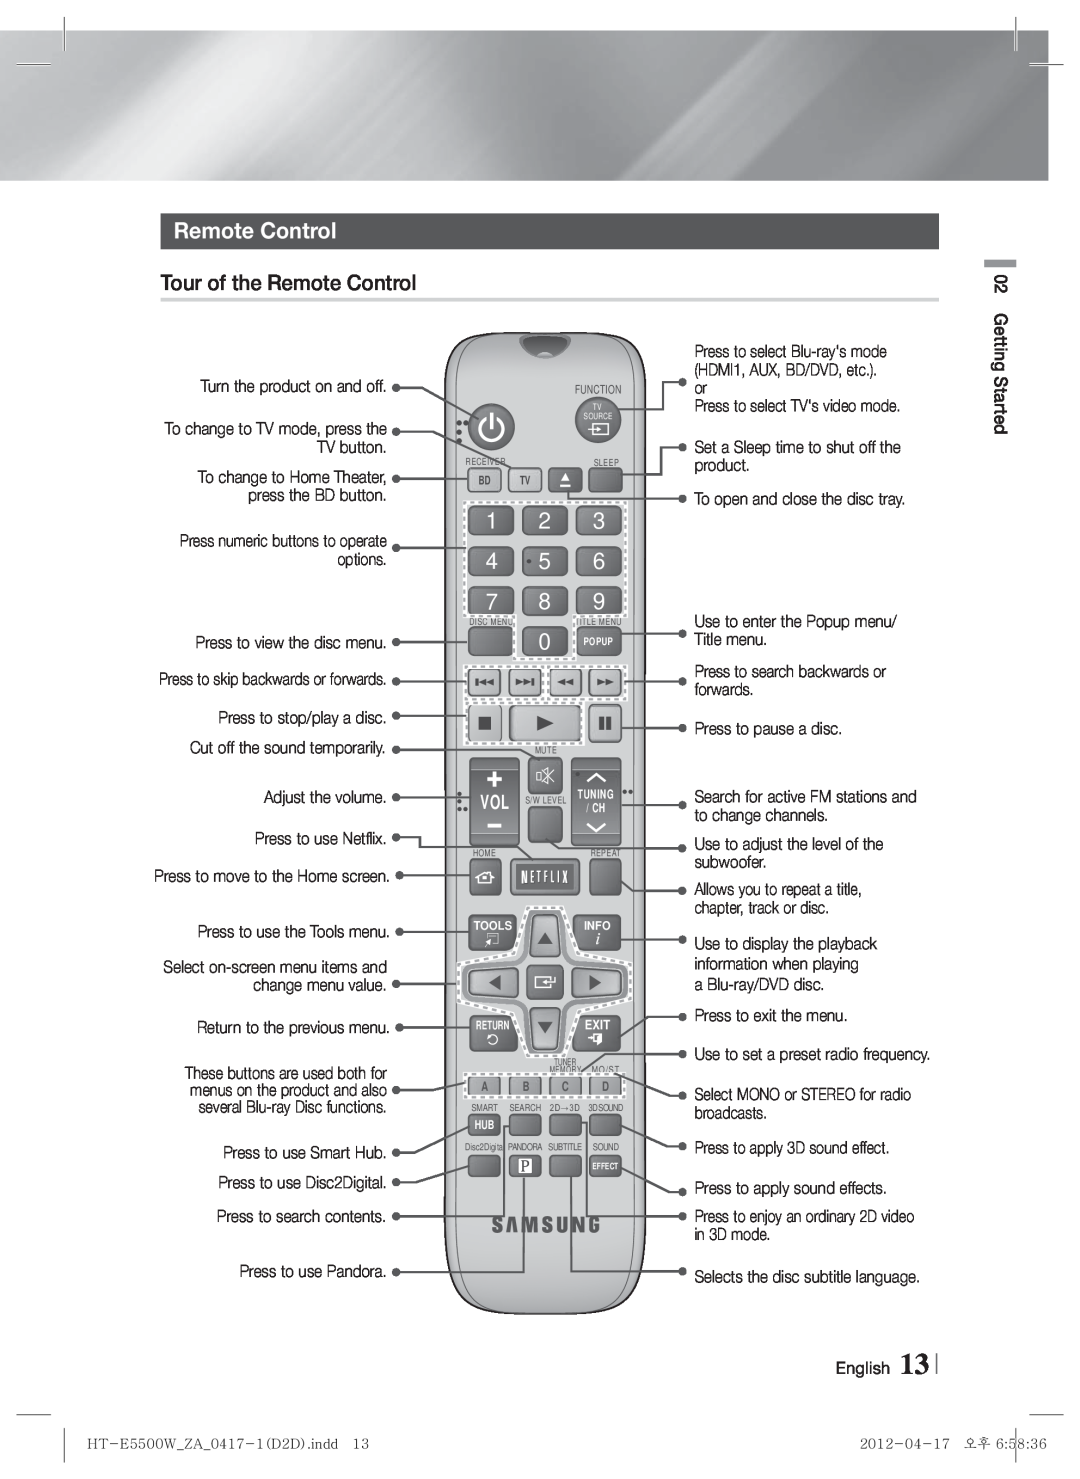 Samsung HT-E550 Remote Control, 3 6 9, TV button, press the BD button, product, TITLE MENUUse to enter the Popup menu 